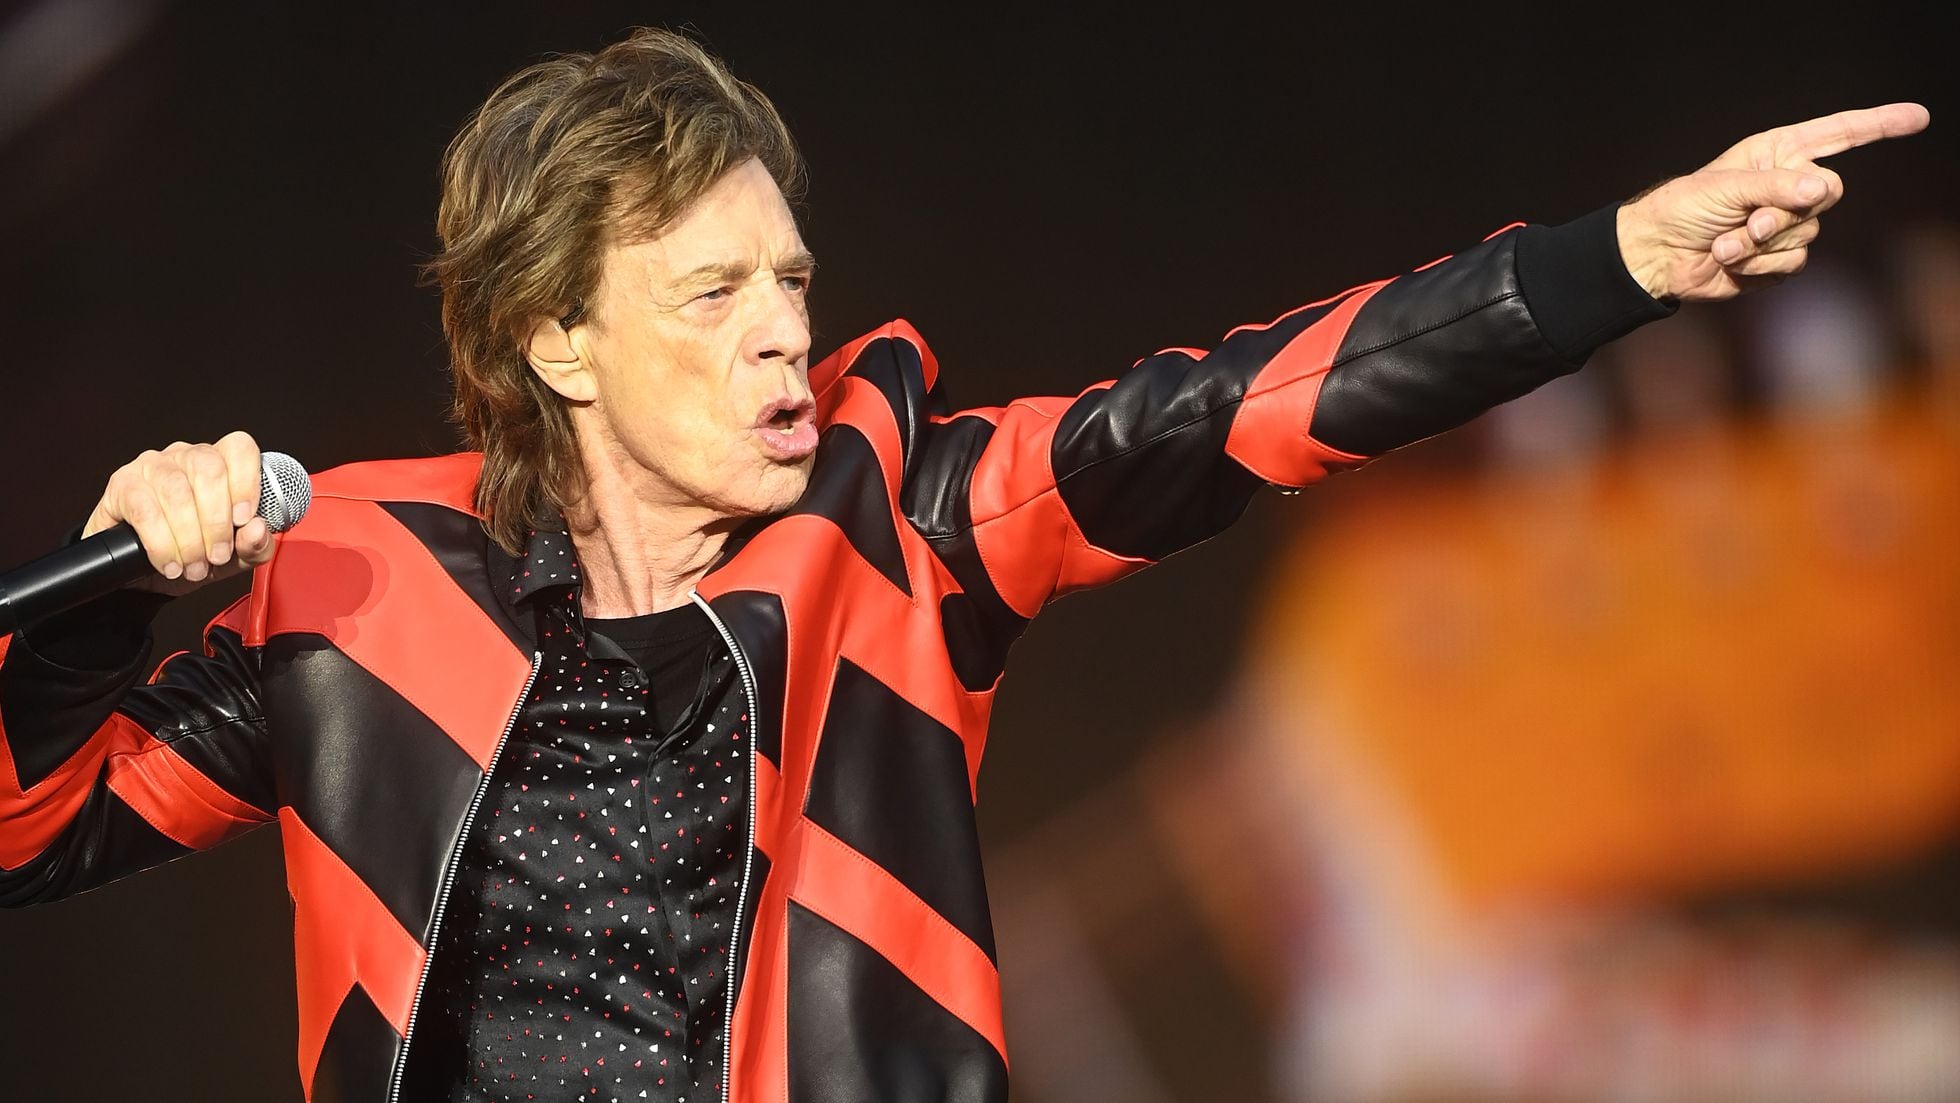 Mick Jagger: \'To be honest, rather | English | Culture I\'d EL PAÍS be 30′